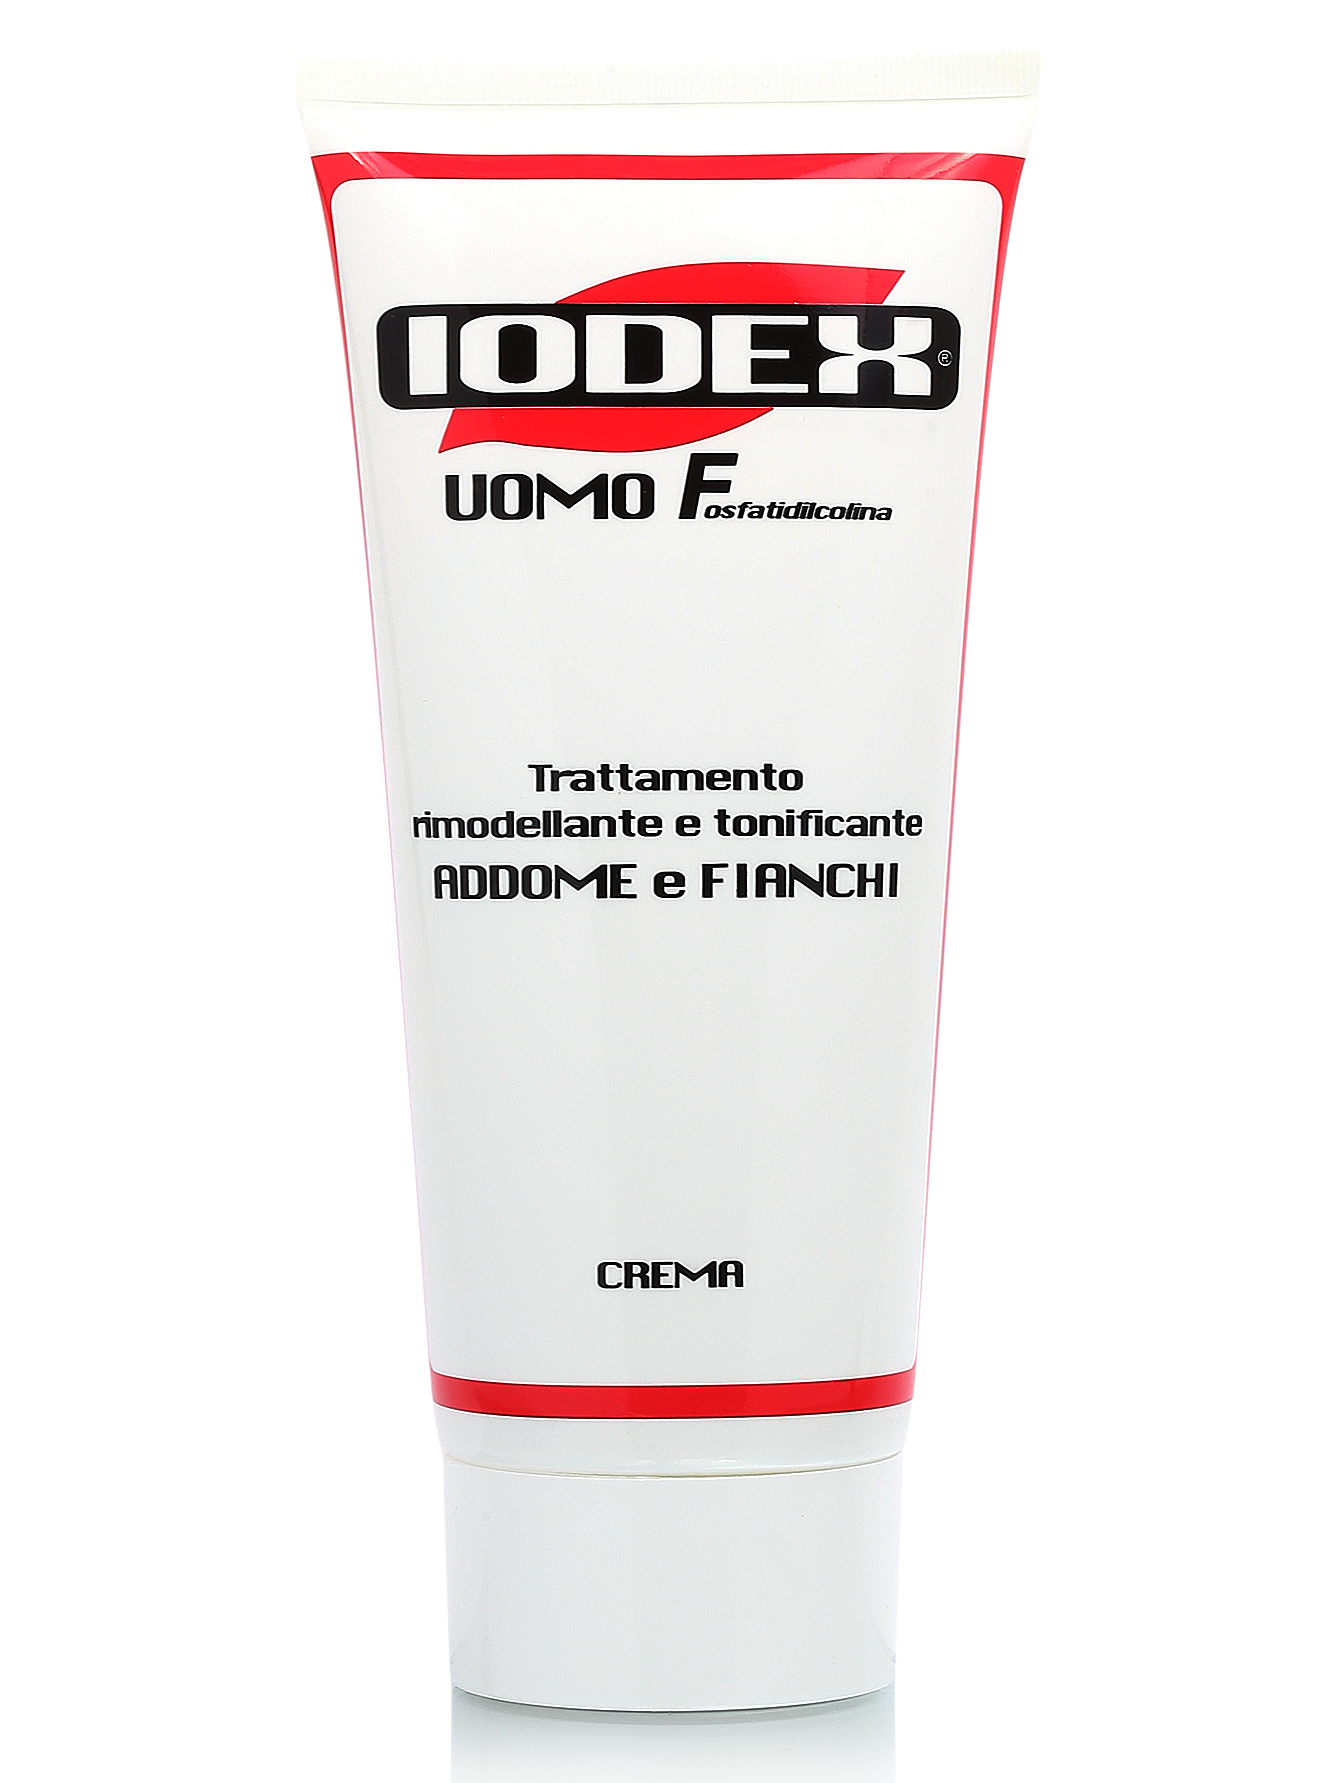  Крем "Iodex Uomo F-Fosfatidilcolina" - Body Care, 200ml - Общий вид